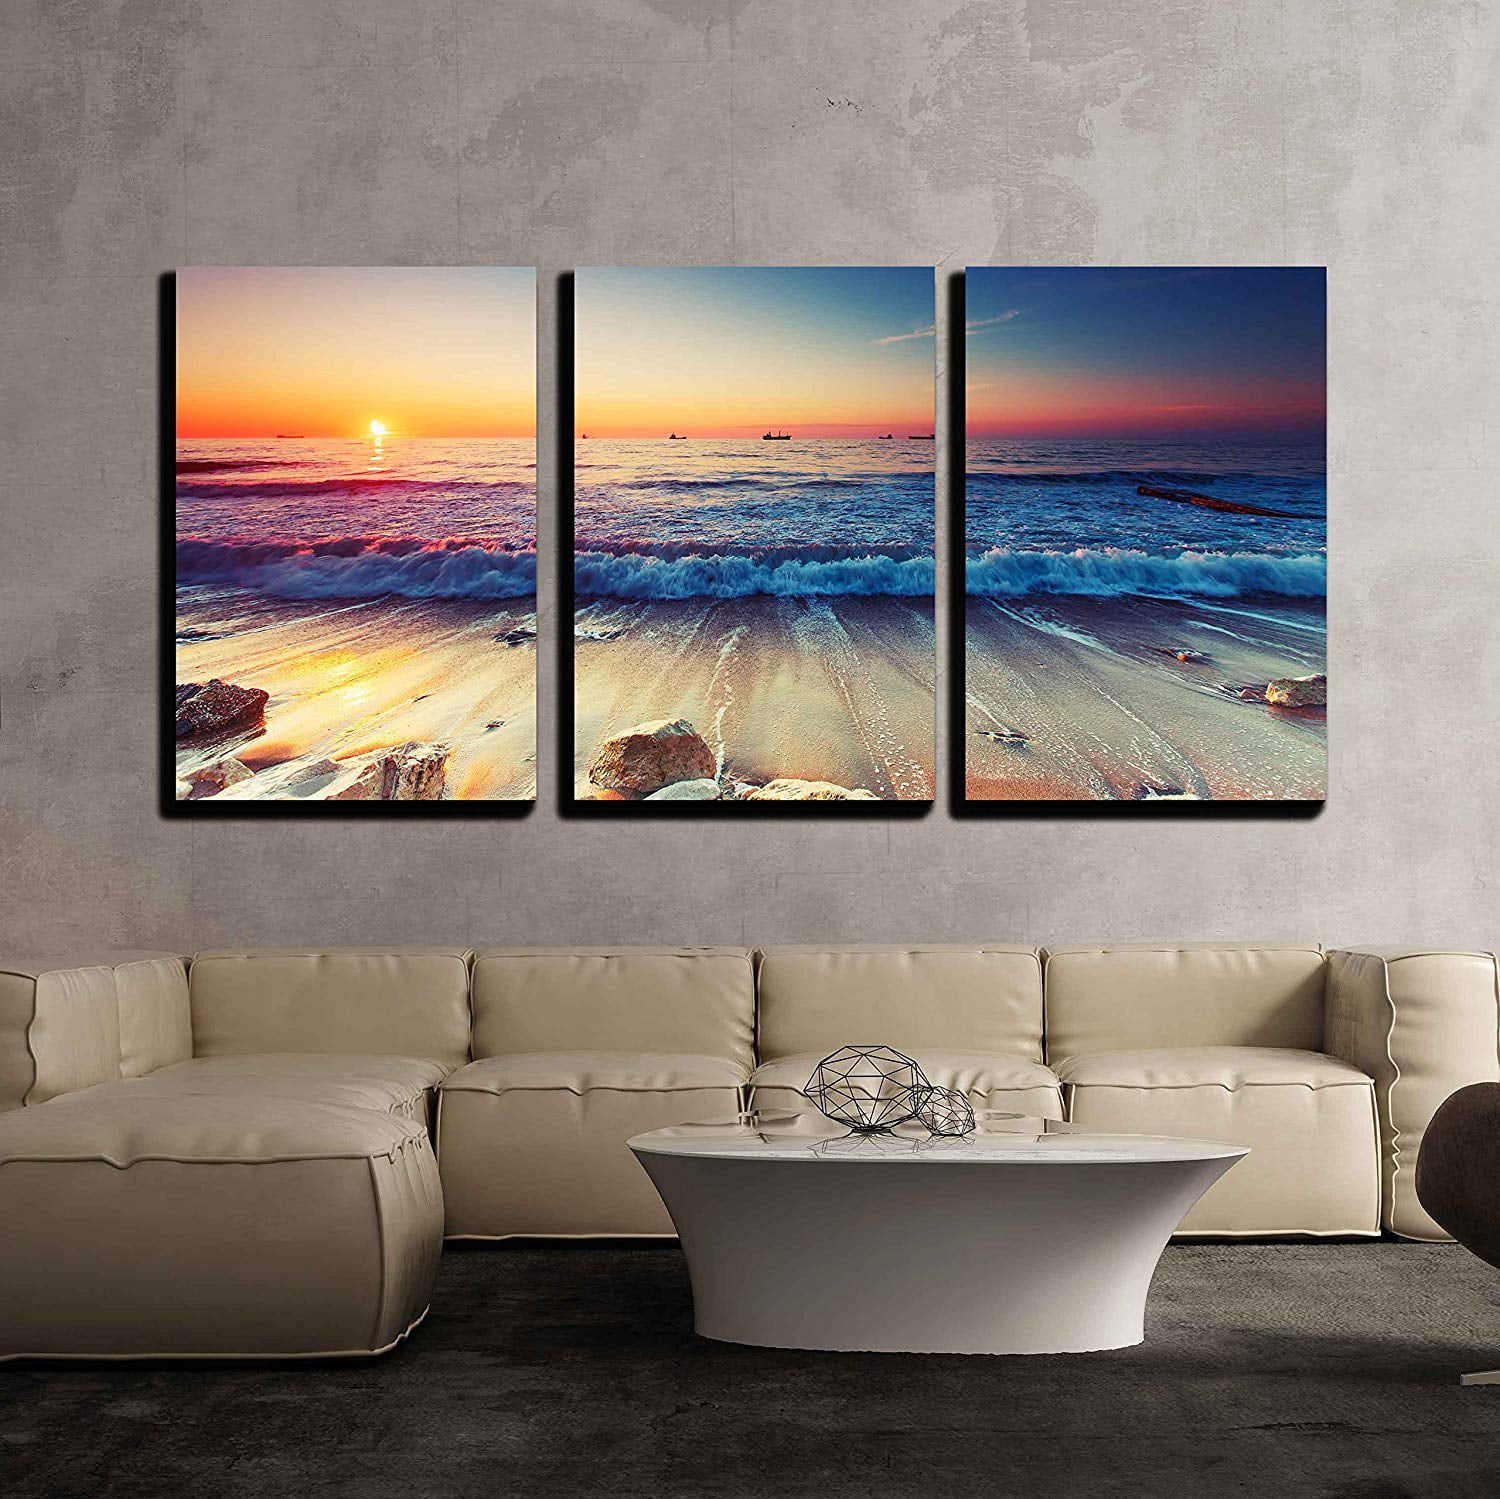 Wall26 3 Piece Canvas Wall Art - Beautiful Sunrise over the Horizon